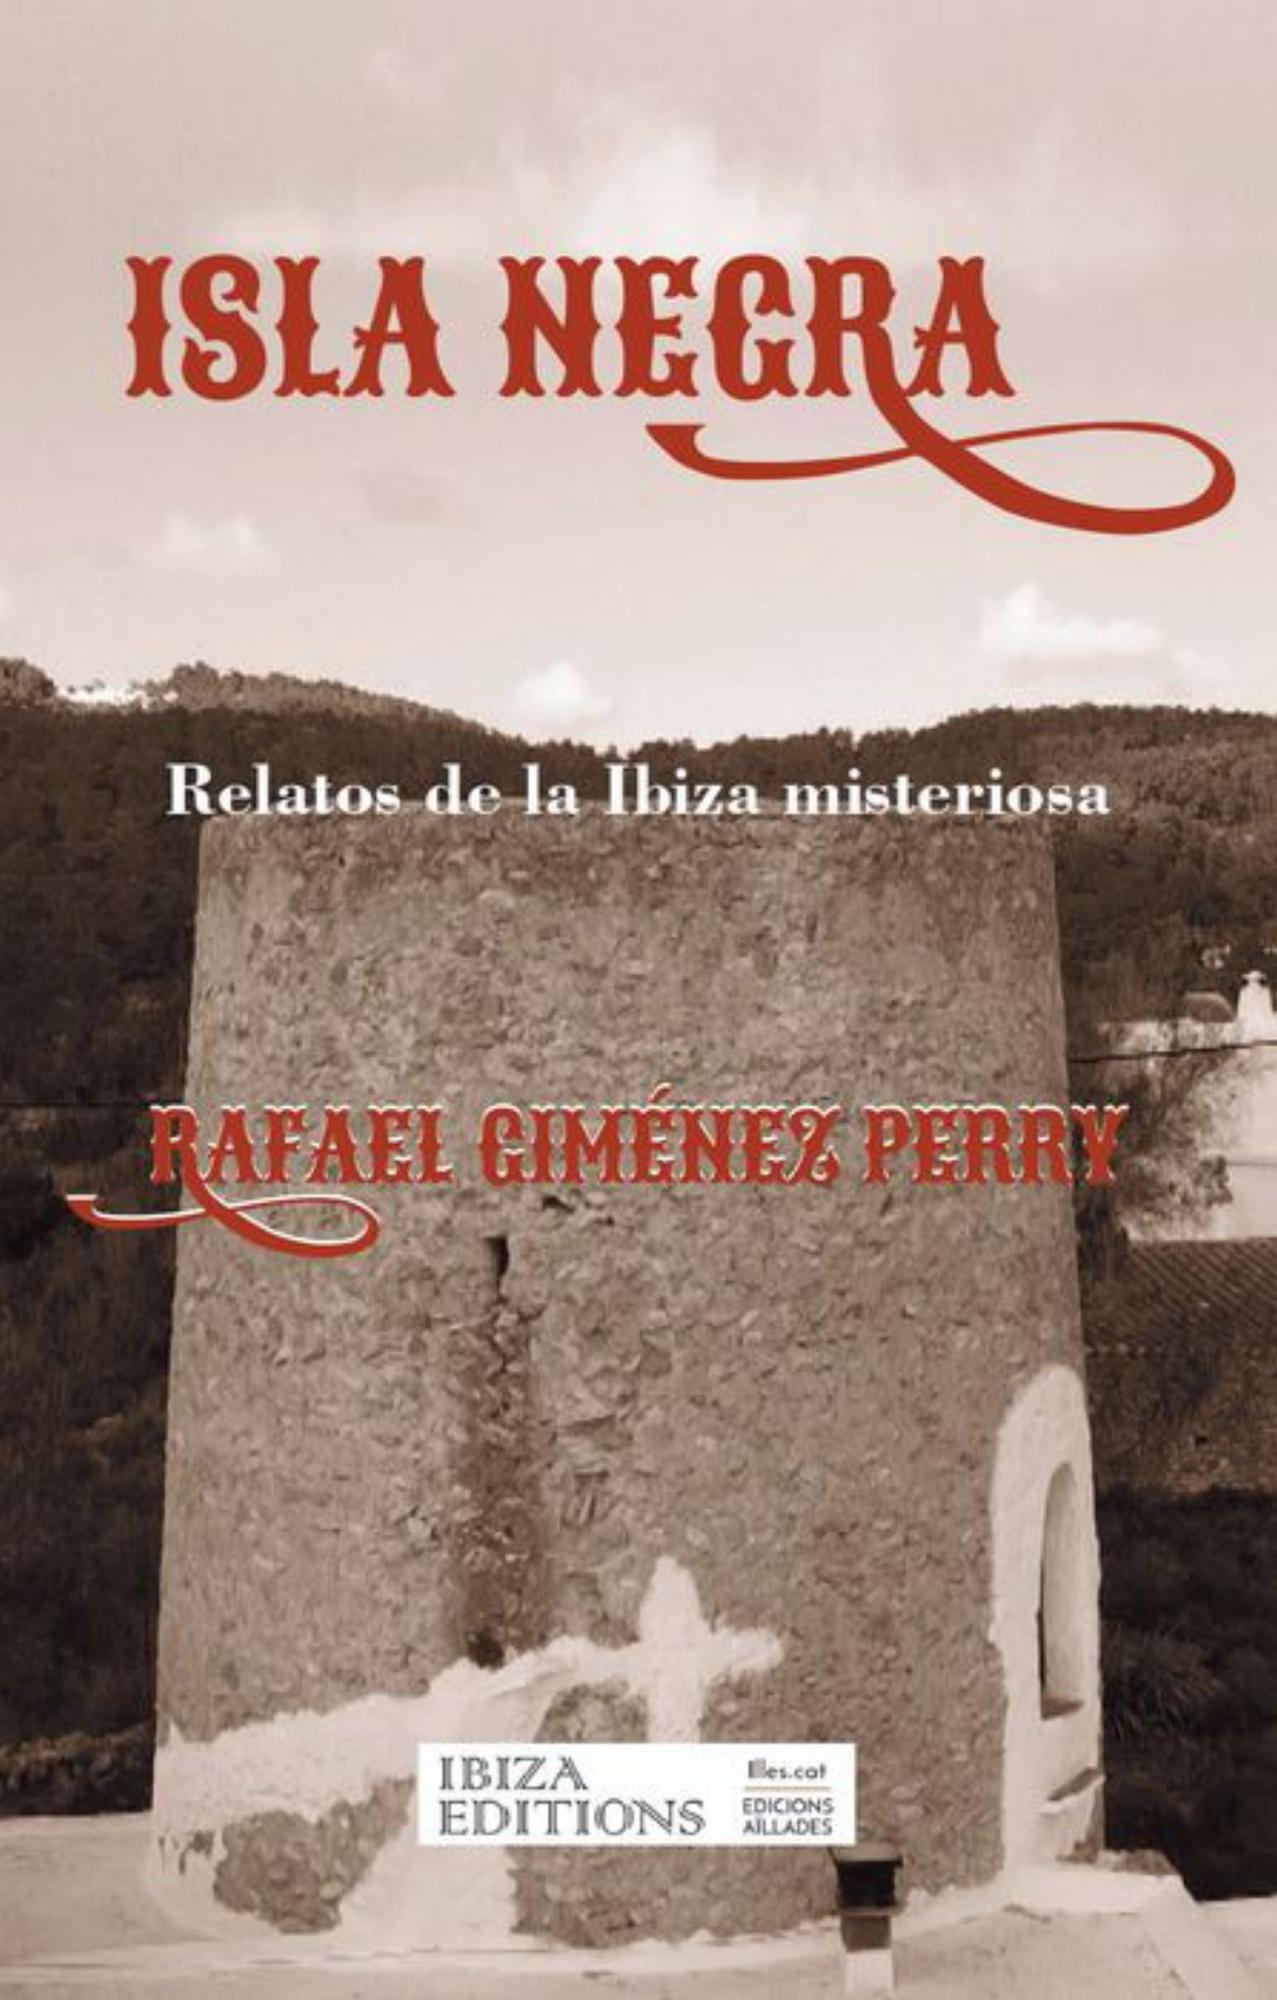 Portada del primer libro de Rafael Giménez Perry.